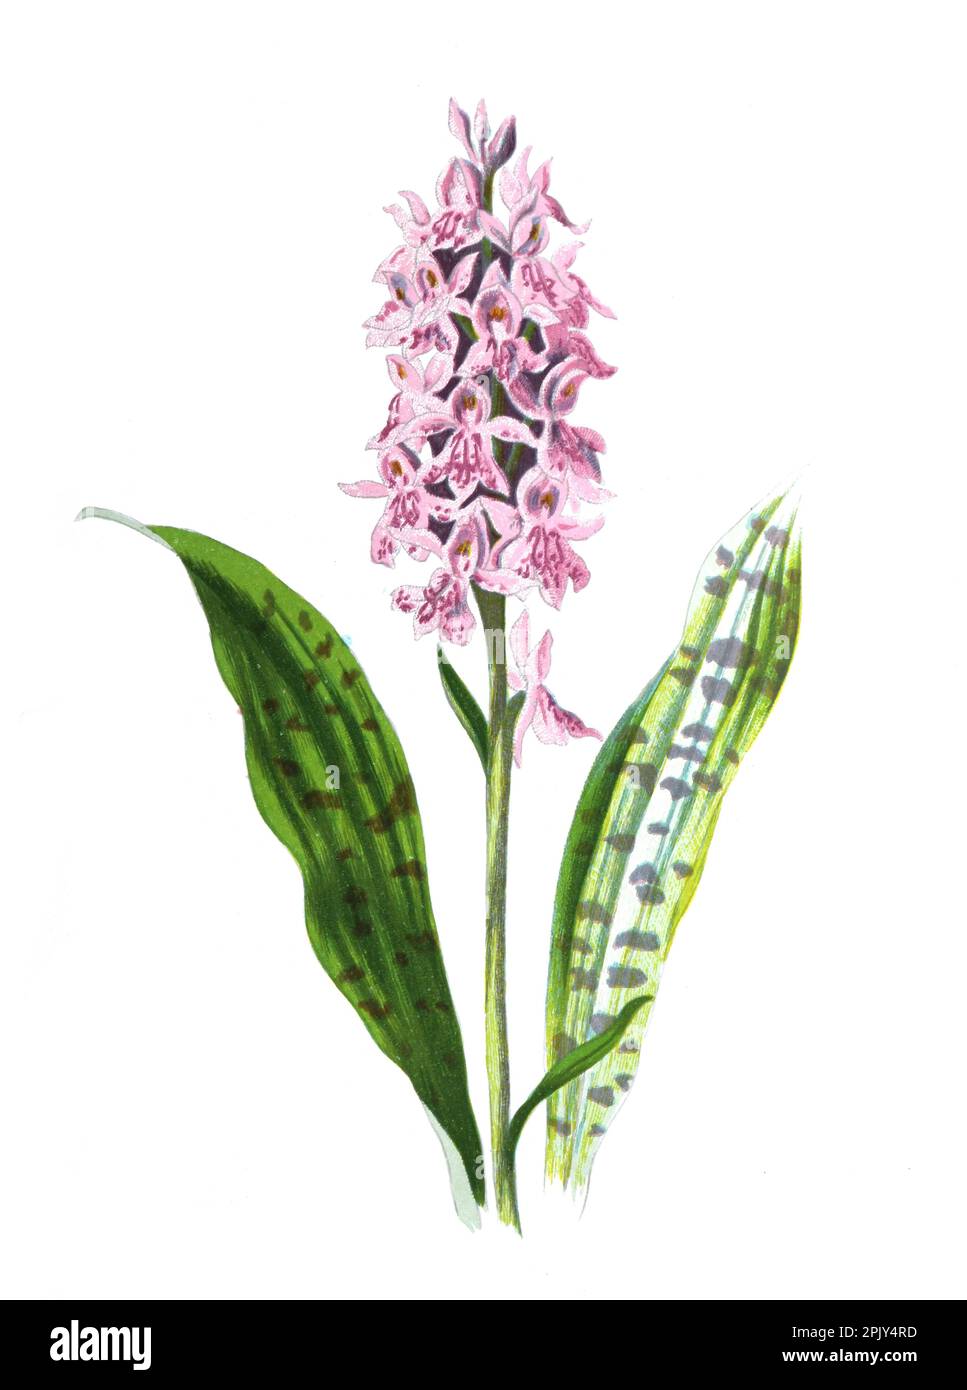 Orchis mascula, die frühe violette Orchidee, frühfrühlingshorchis oder gefleckte orchideen. Vintage Hand gezeichnete wilde orchisblume. Orchis mascula Illustration. Stockfoto